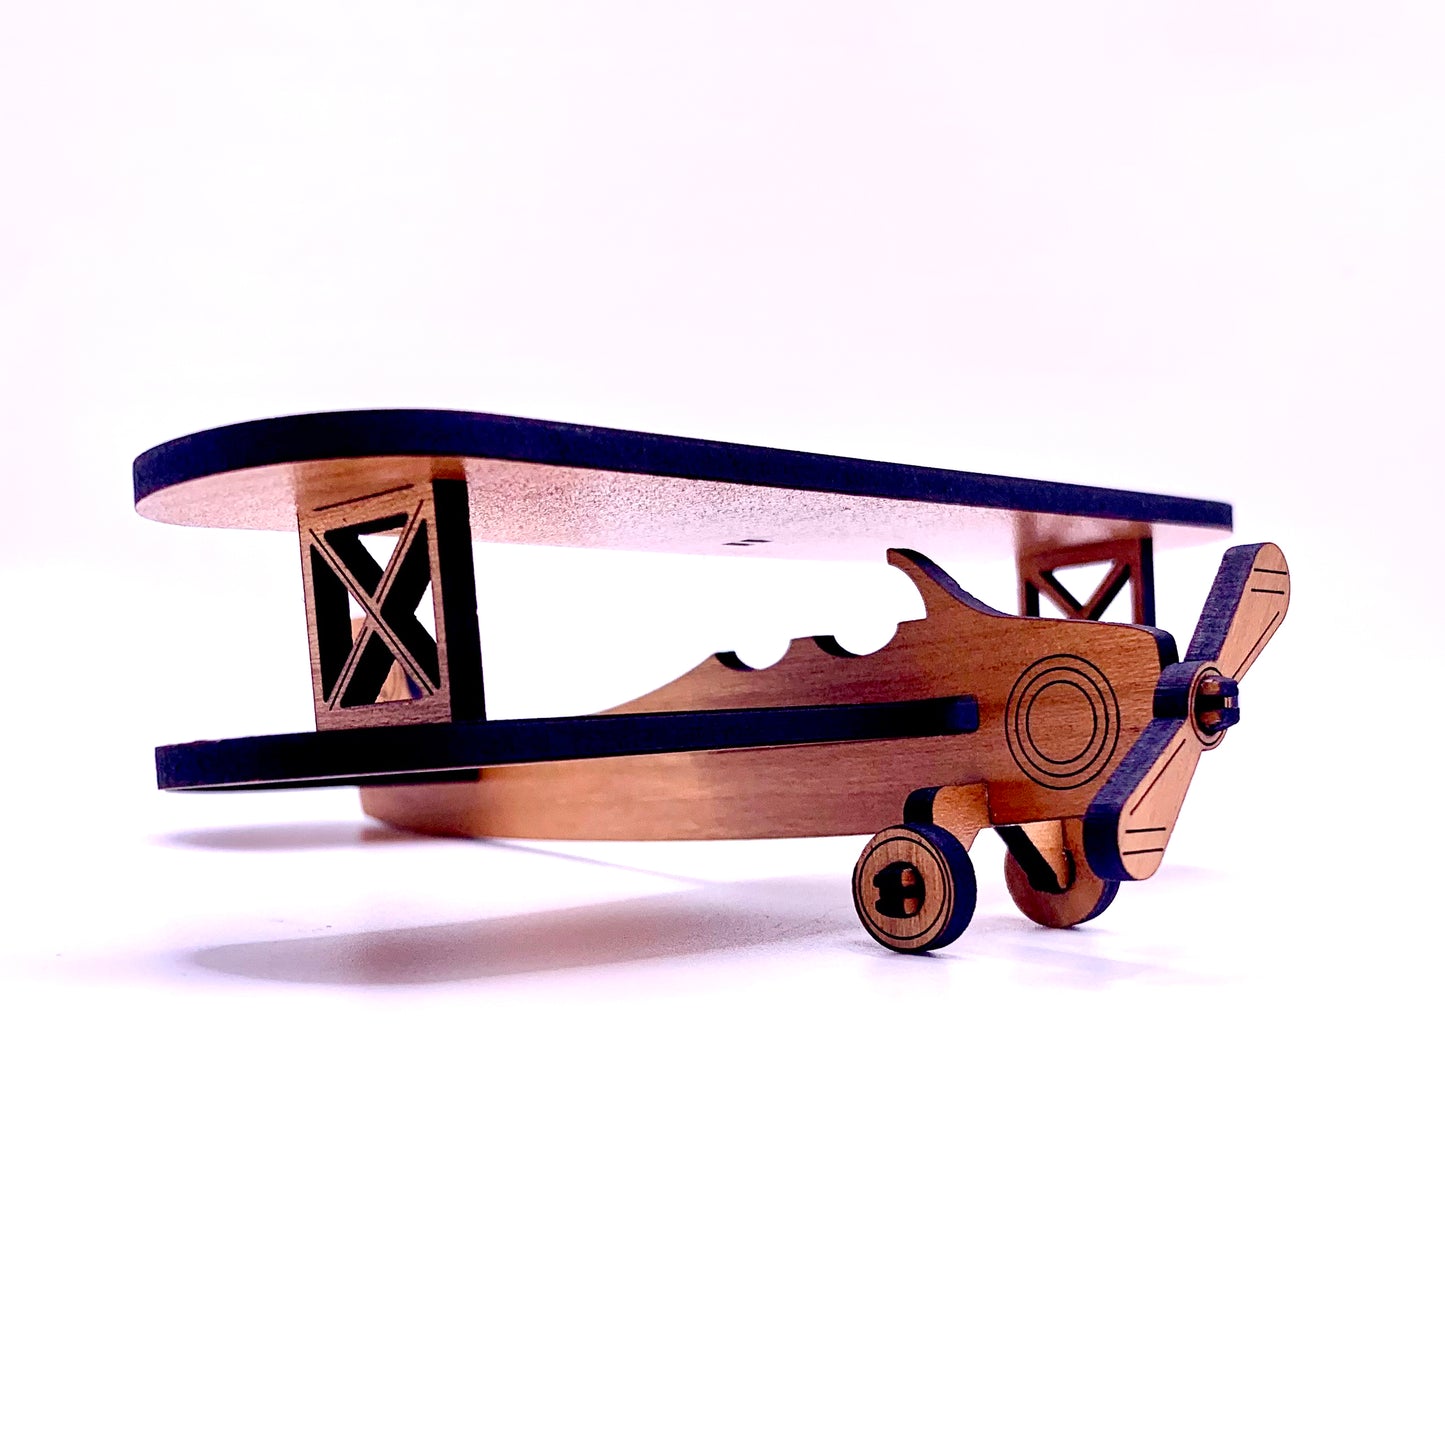 Airplane Model - Biplane